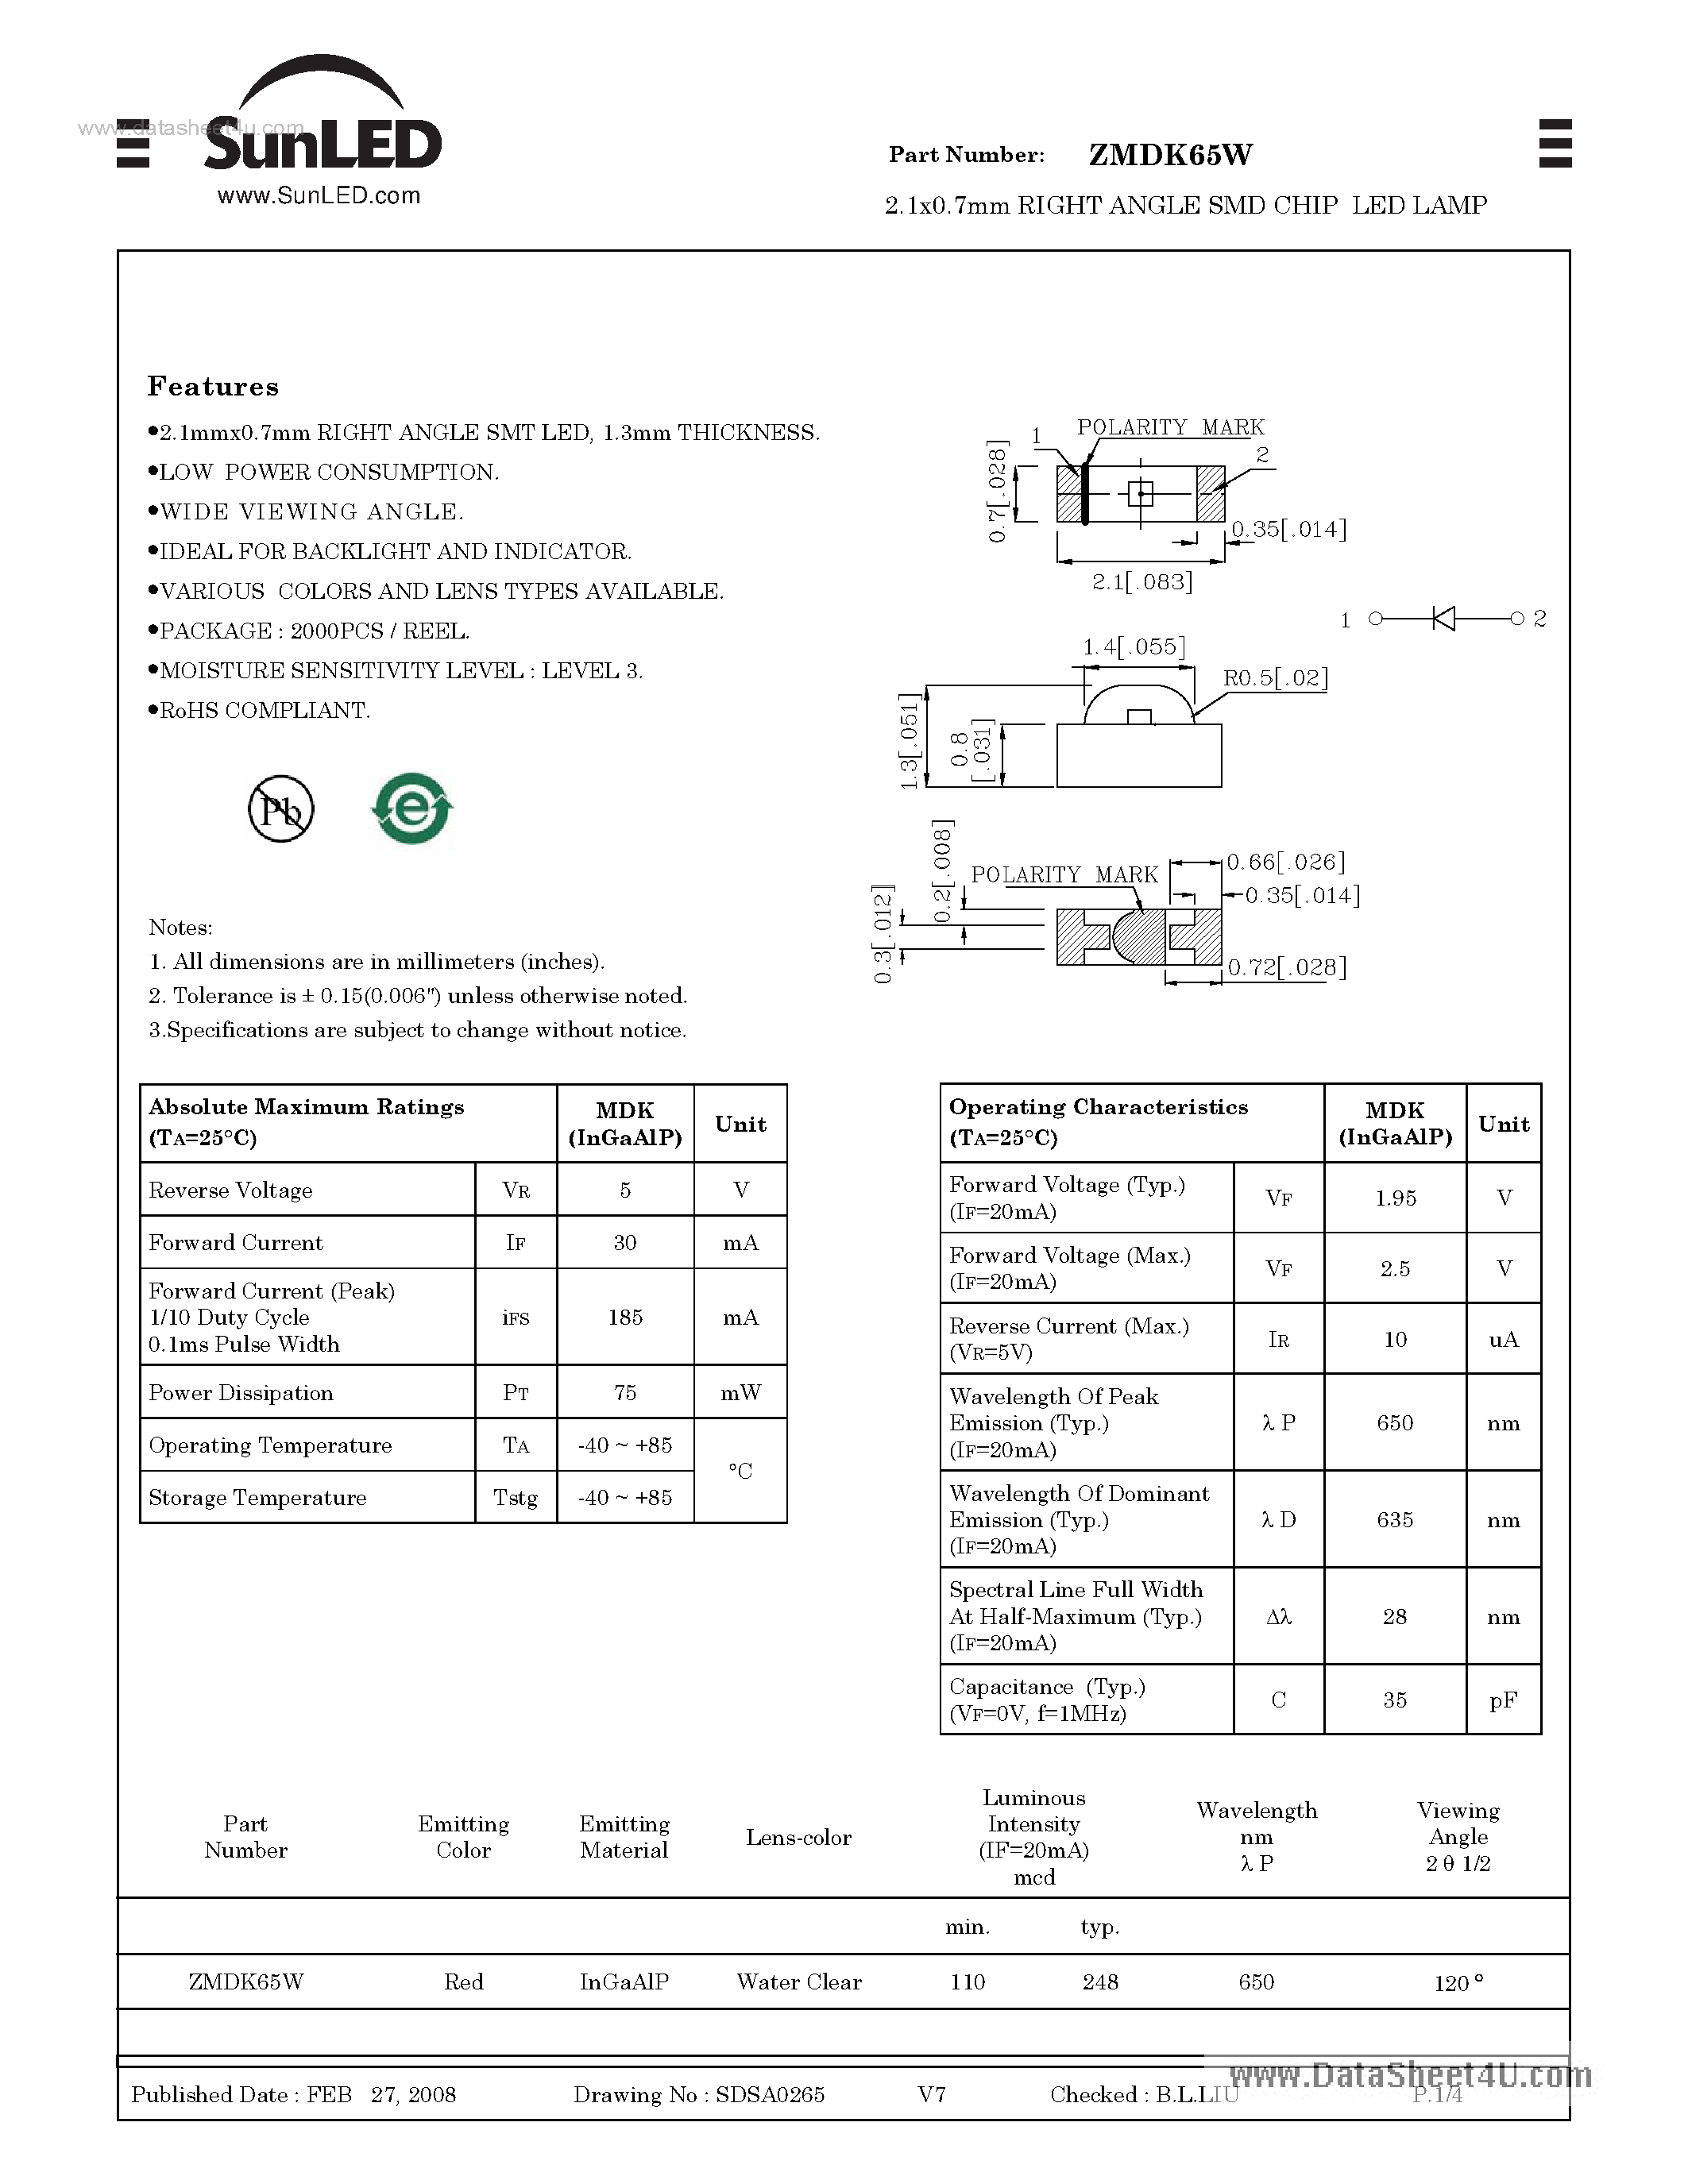 Datasheet ZMDK65W - 2.1x0.7mm RIGHT ANGLE SMD CHIP LED LAMP page 1